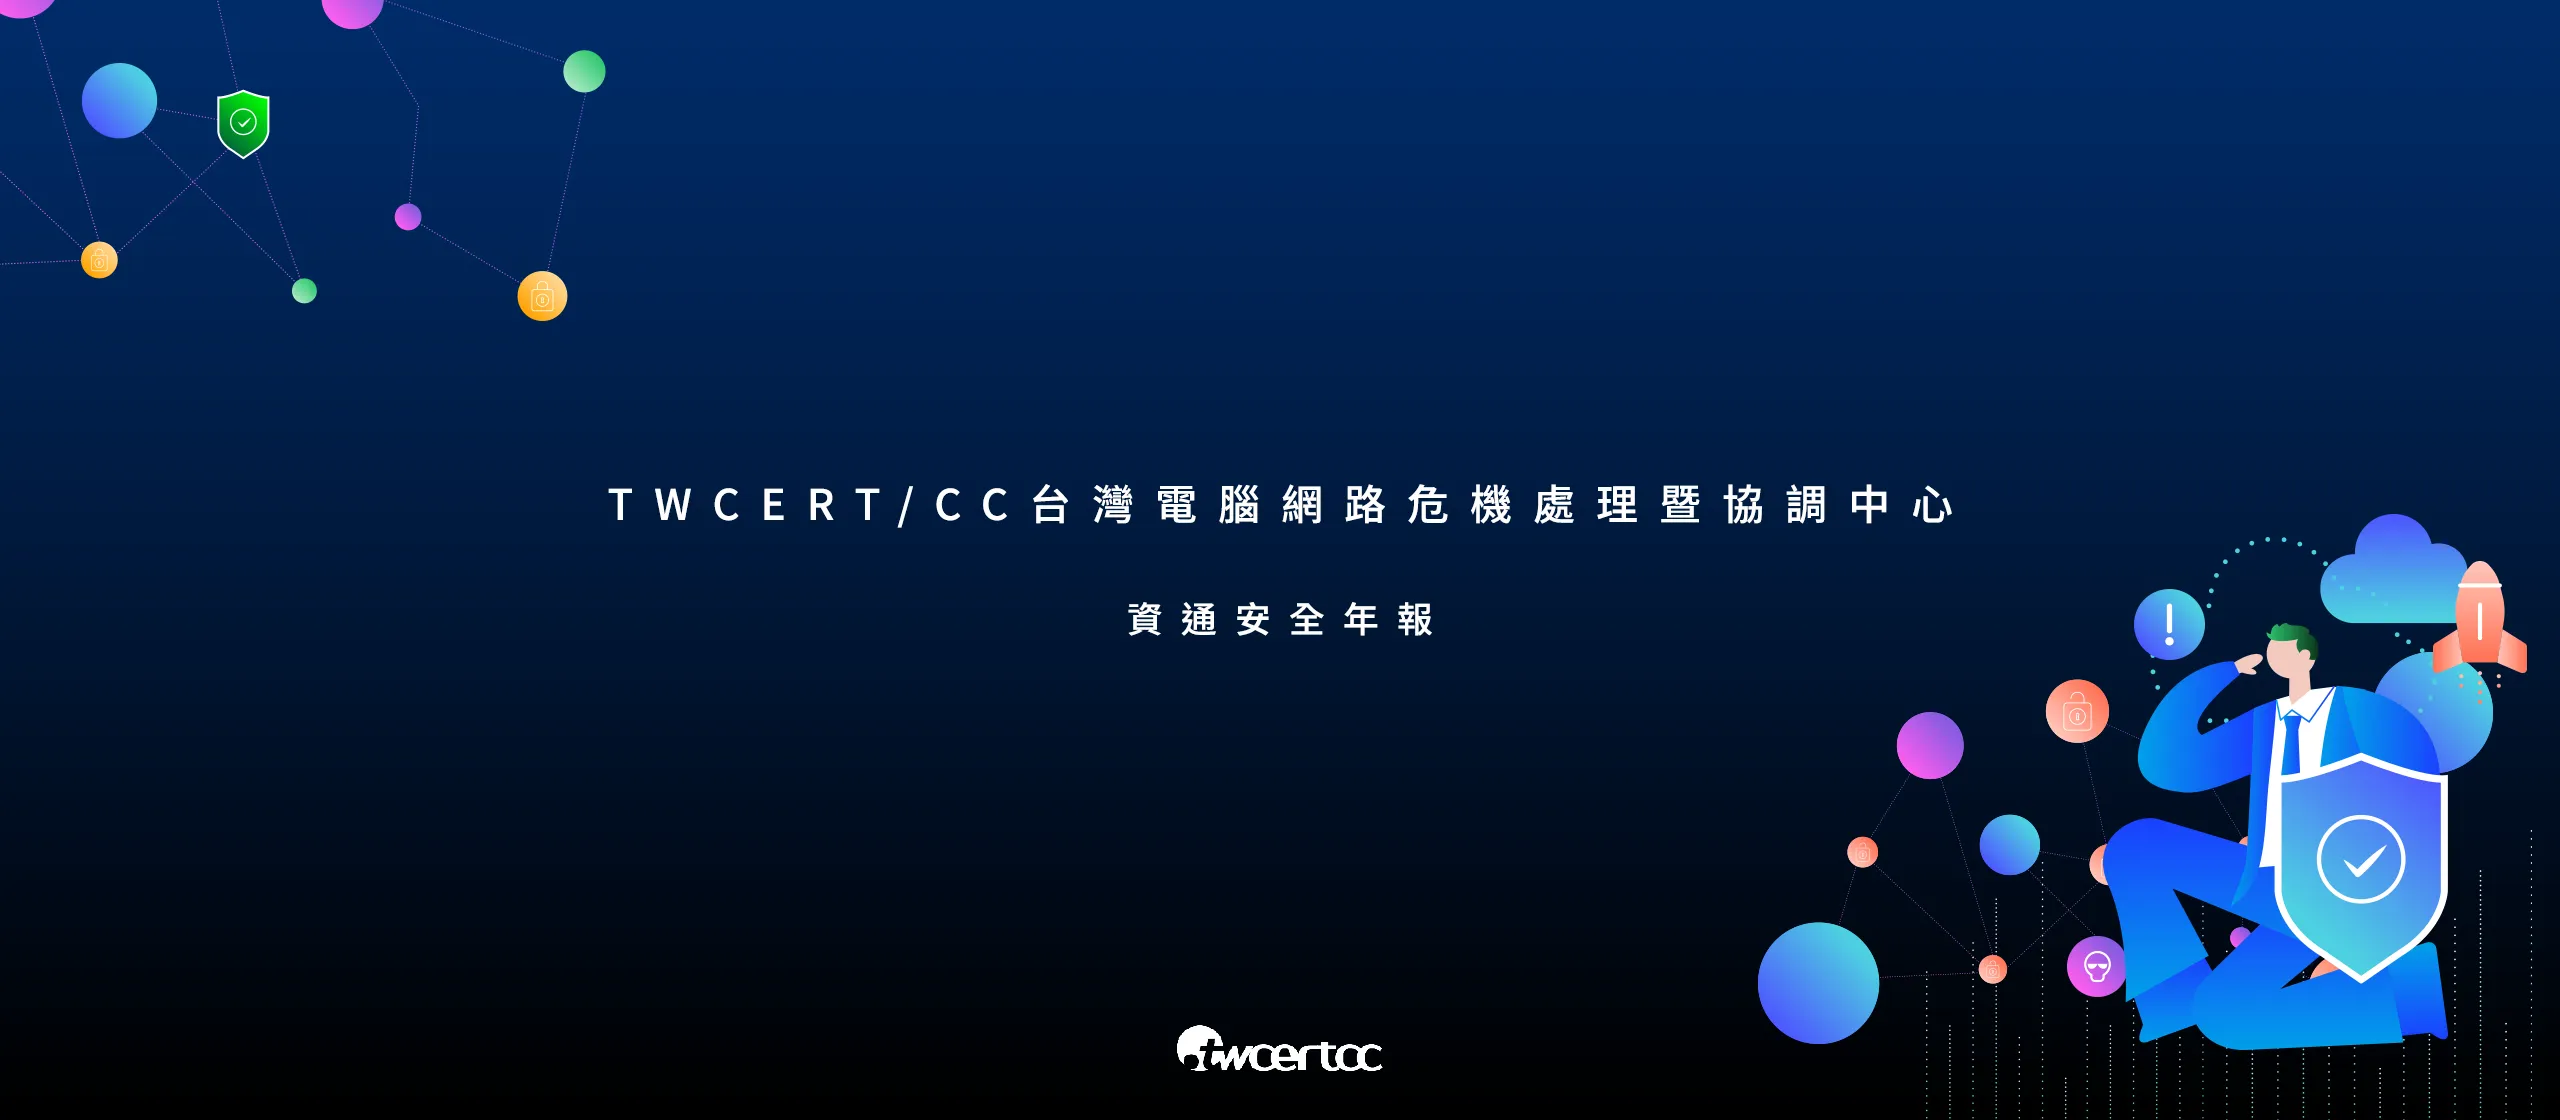 TWCERT/CC台灣電腦網路危機處理暨協調中心 資通安全年報 [品牌設計 / ci設計 / vi設計 / logo設計 / 平面設計 / 型錄設計 / 展場設計]